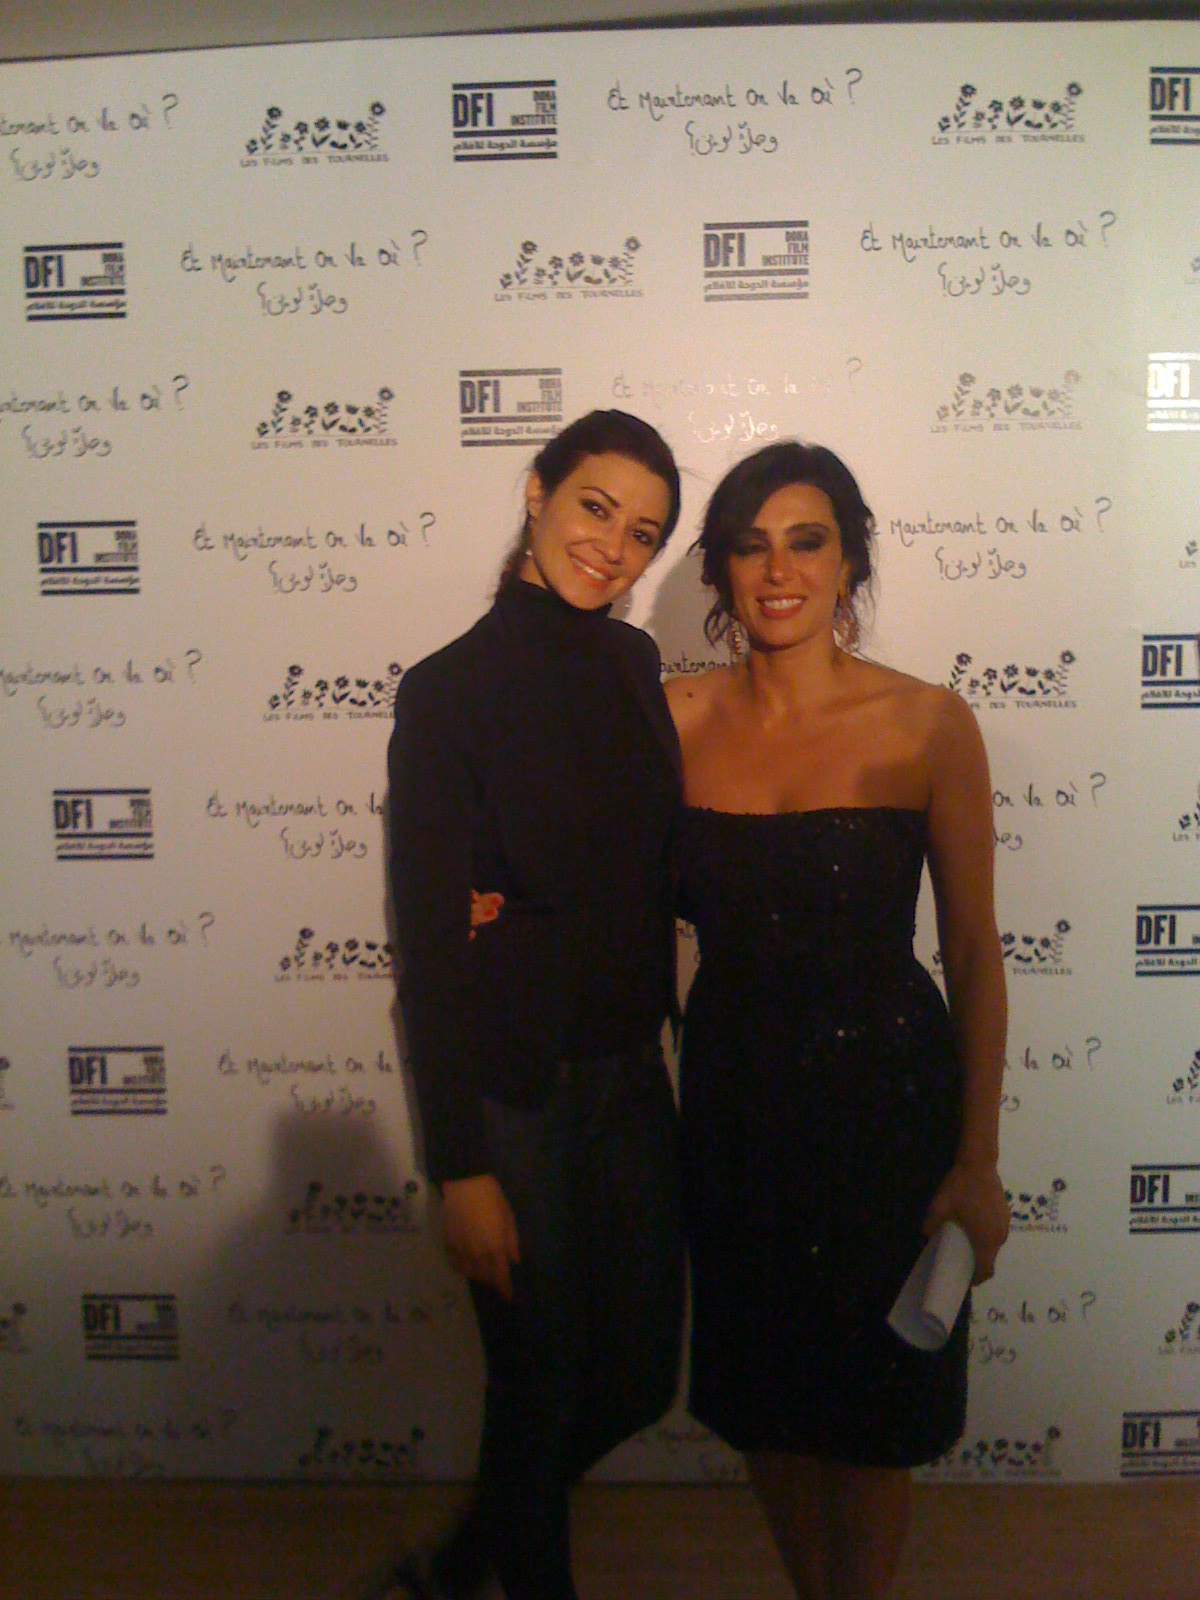 Arwa Gouda & Nadina Labaki In the 2011 Cannes Film Festival at 